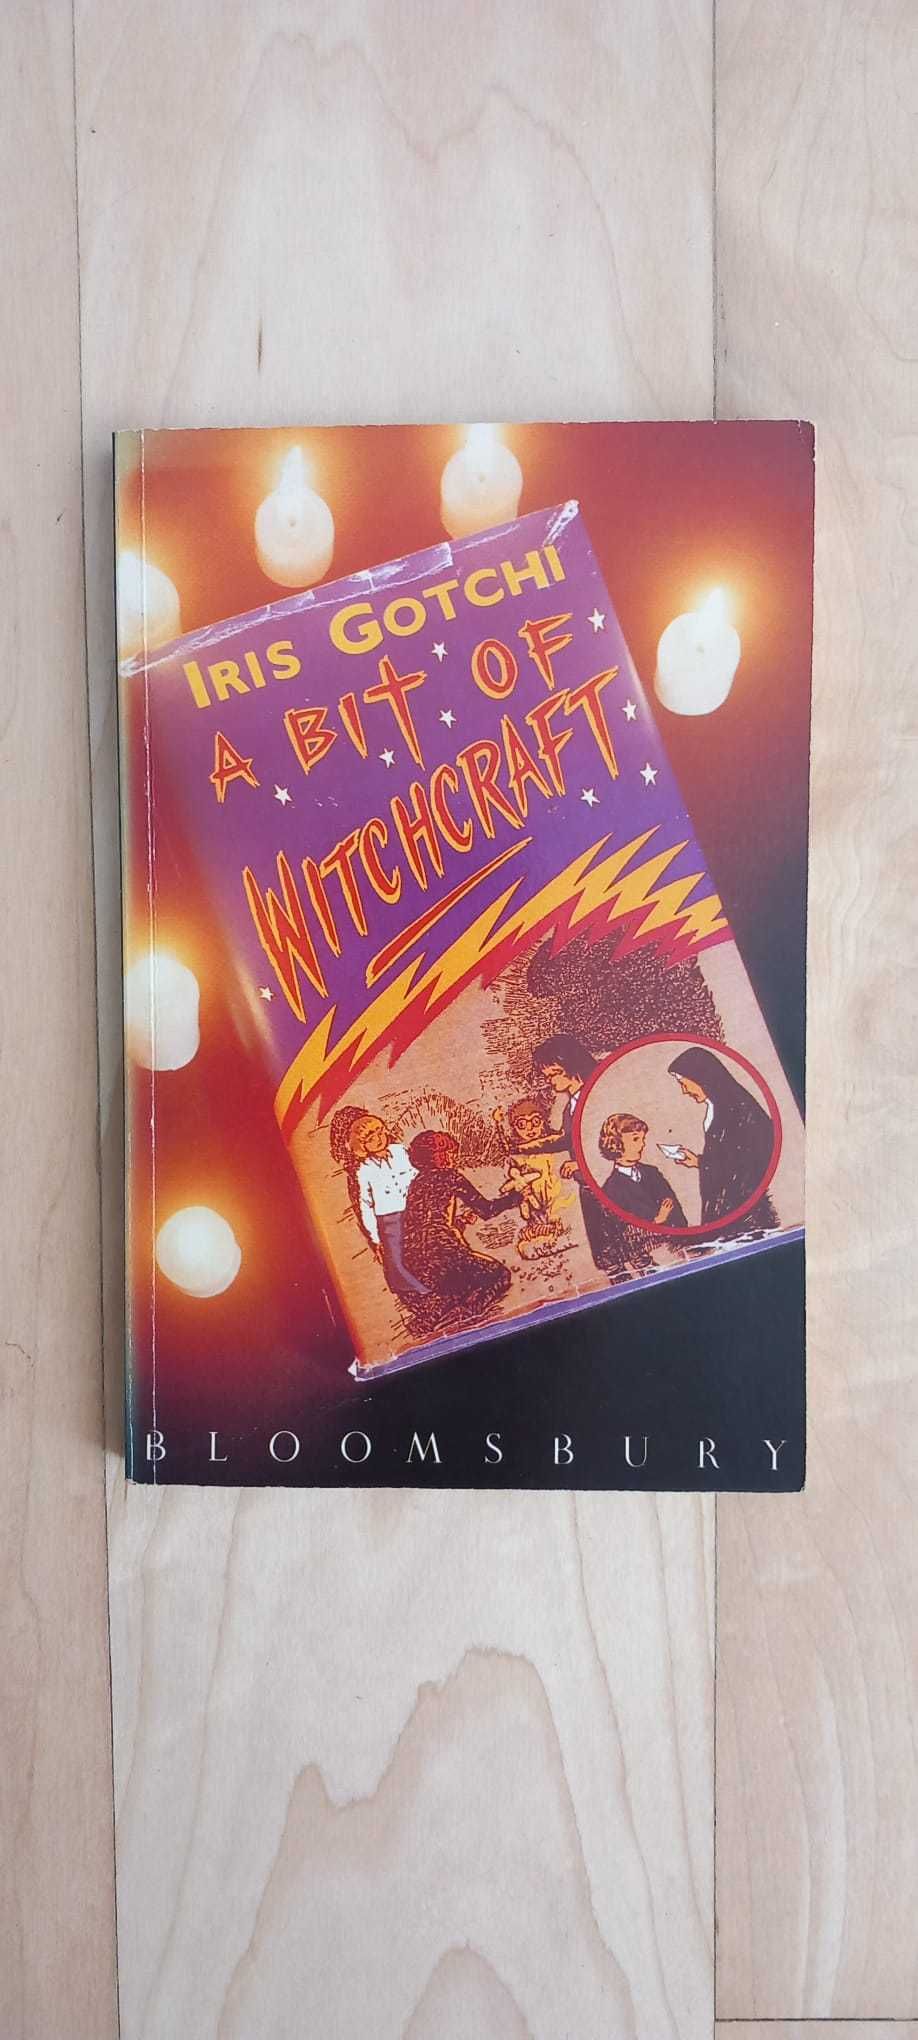 Livro "A bit of witchcraft" de Iris Gotchi